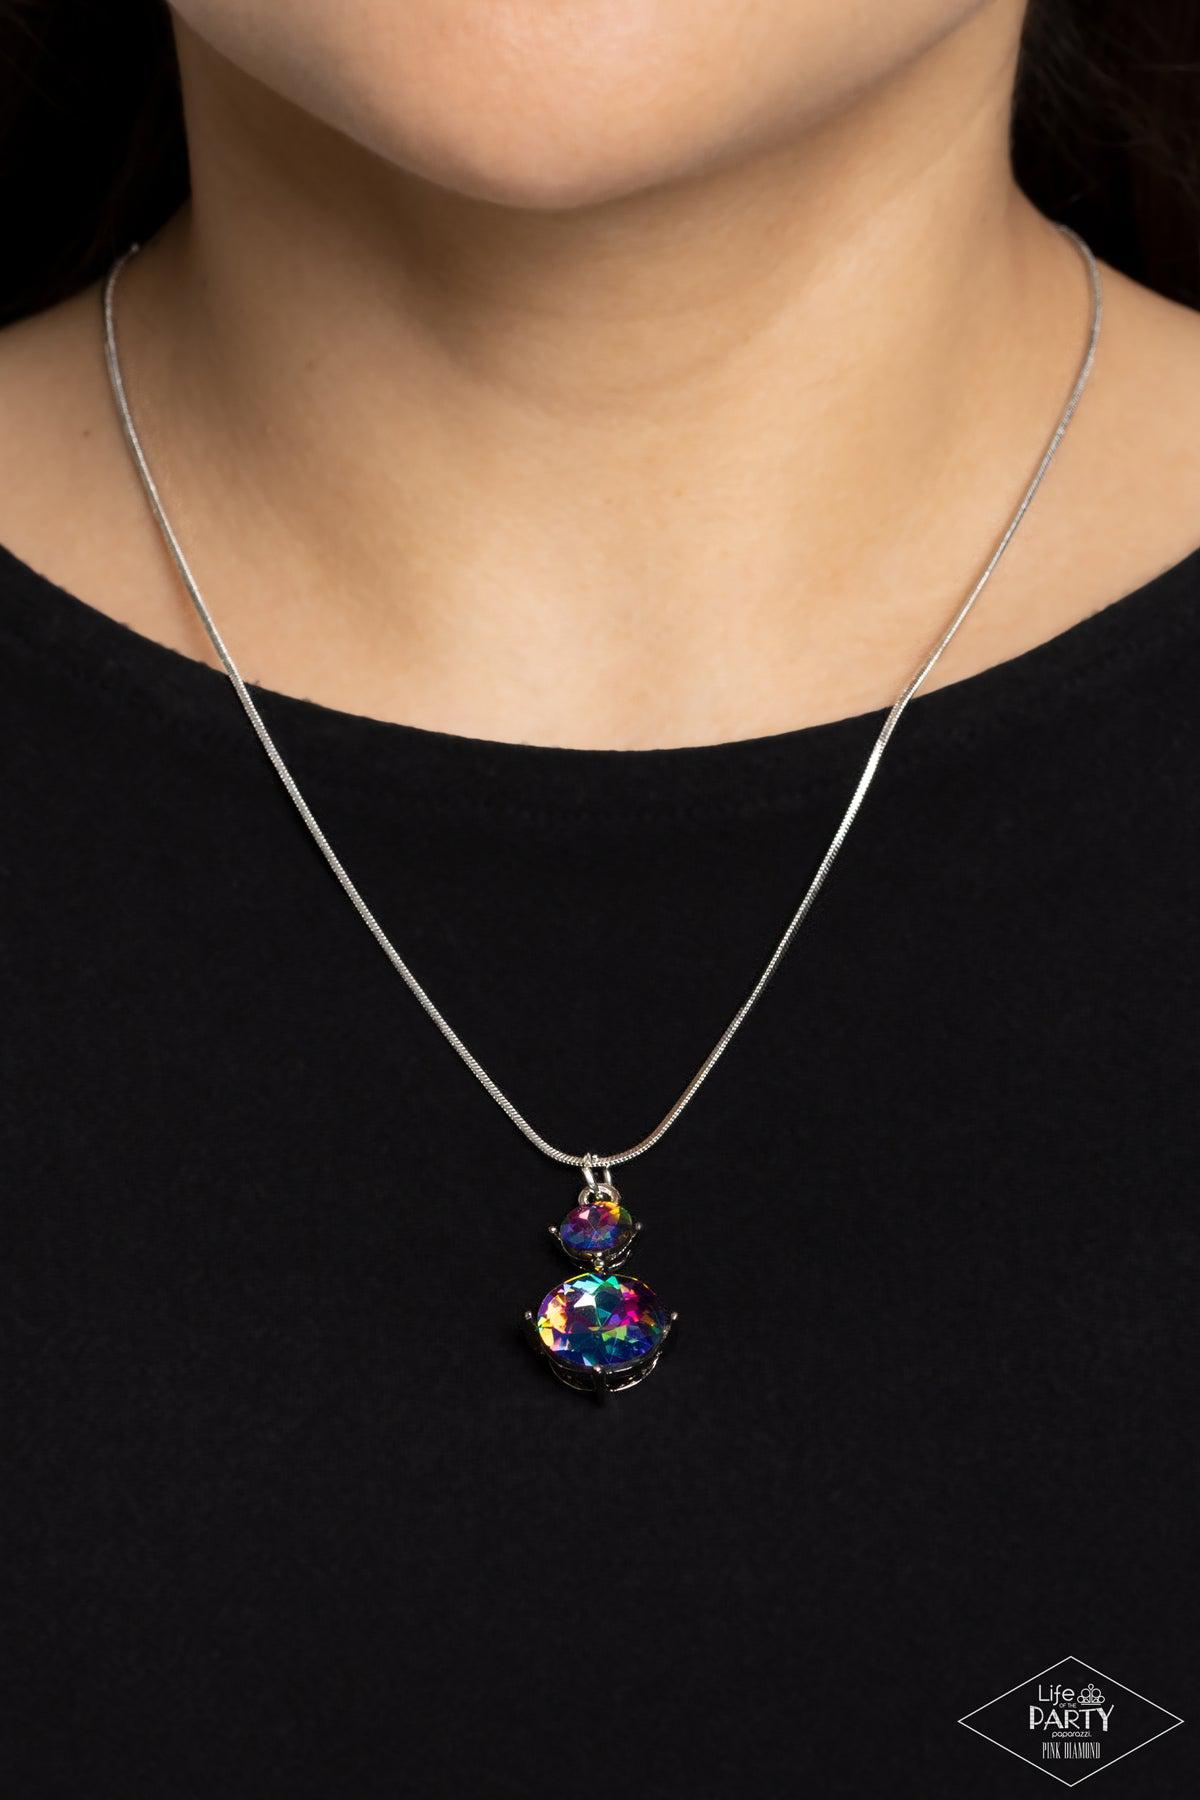 Top Dollar Diva Multi UV Shimmer Rhinestone Necklace - Paparazzi Accessories- lightbox - CarasShop.com - $5 Jewelry by Cara Jewels